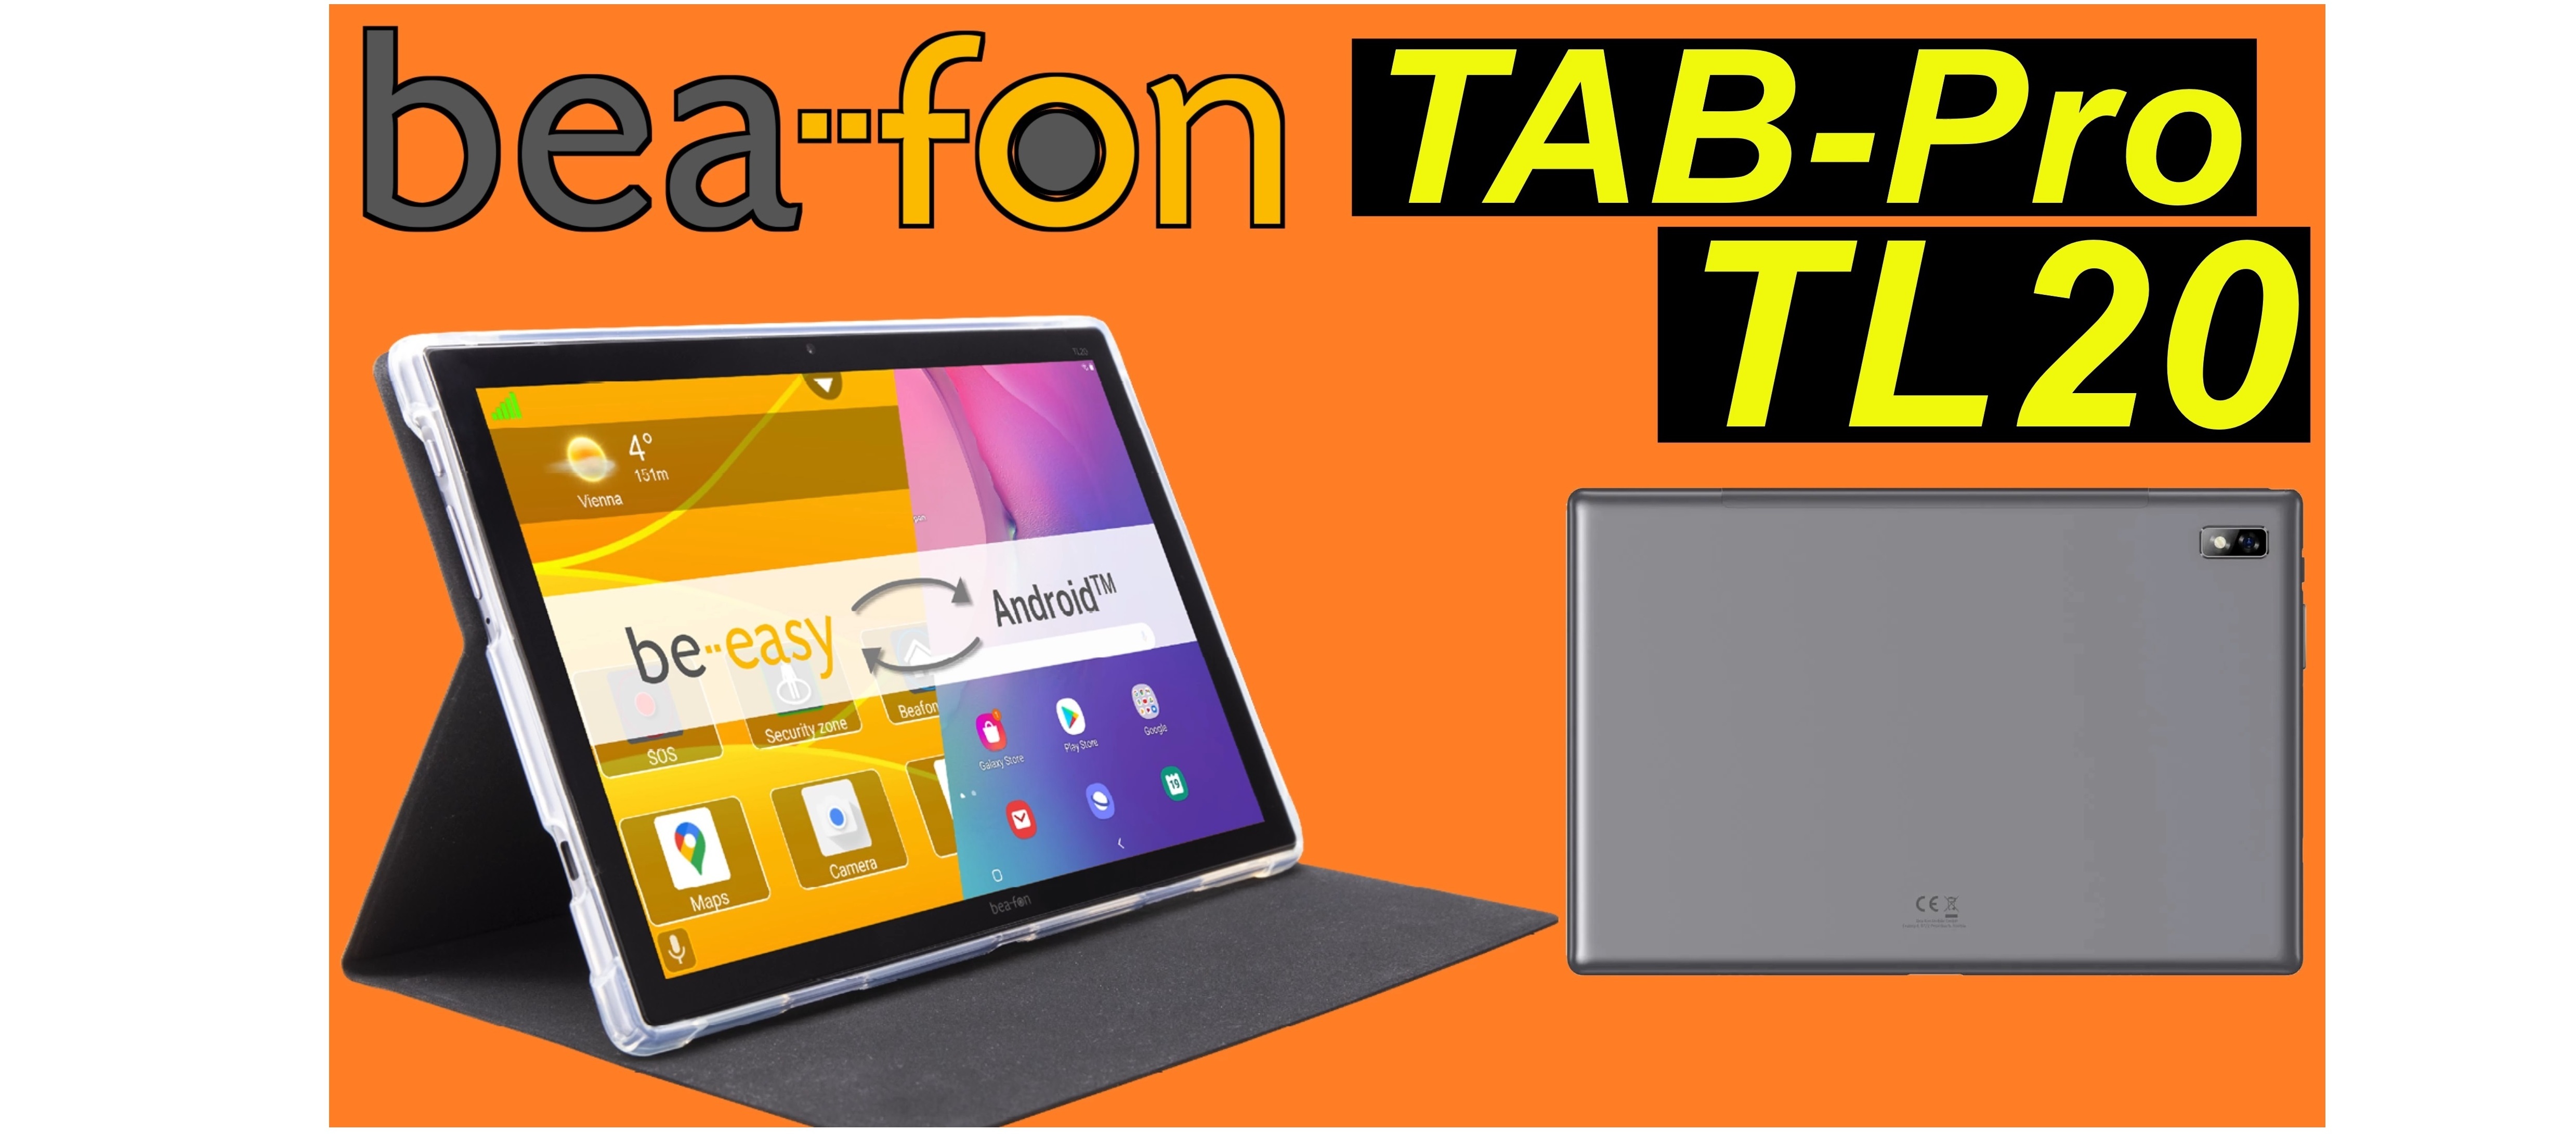 Bea-fon TAB-Pro TL20 - das beinahe Alleskönner Tablet